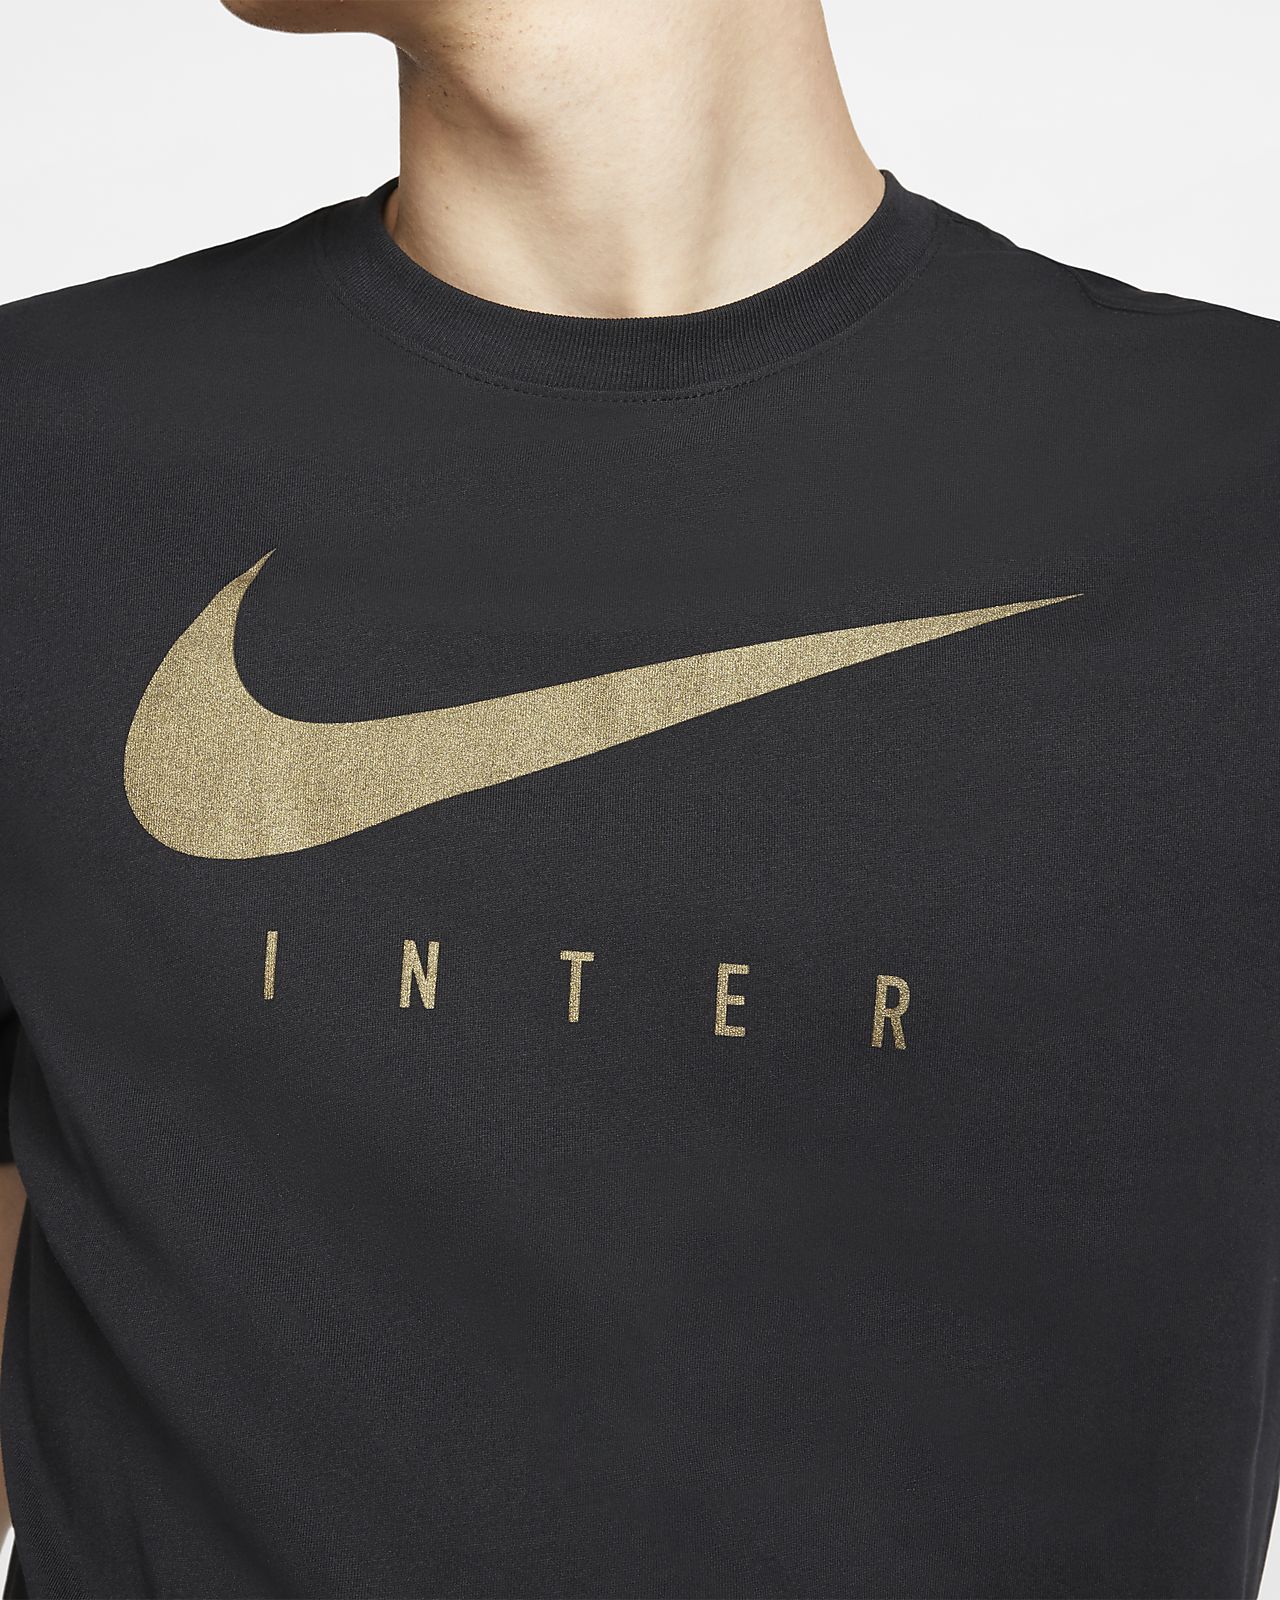 nike inter t shirt